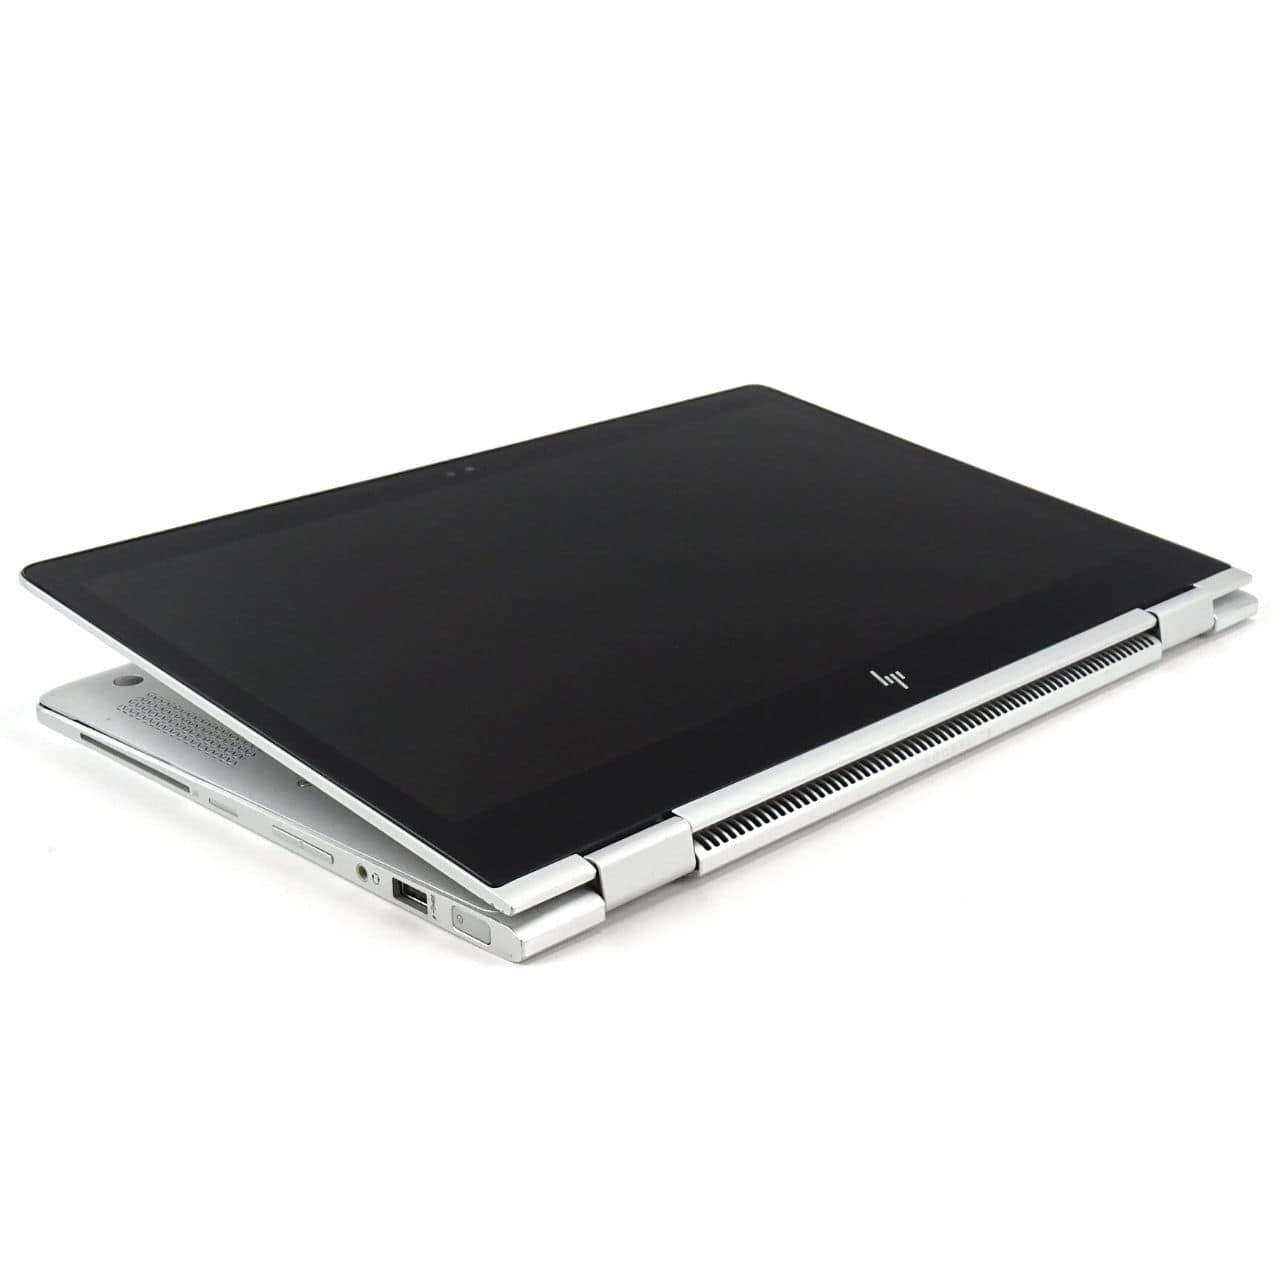 HP EliteBook x360 1030 G3 

 - 13,3 Zoll - Intel Core i5 8250U @ 1,6 GHz - 8 GB - 256 GB SSD - 1920 x 1080 FHD - Touchscreen - Windows 10 Professional - Sehr gut